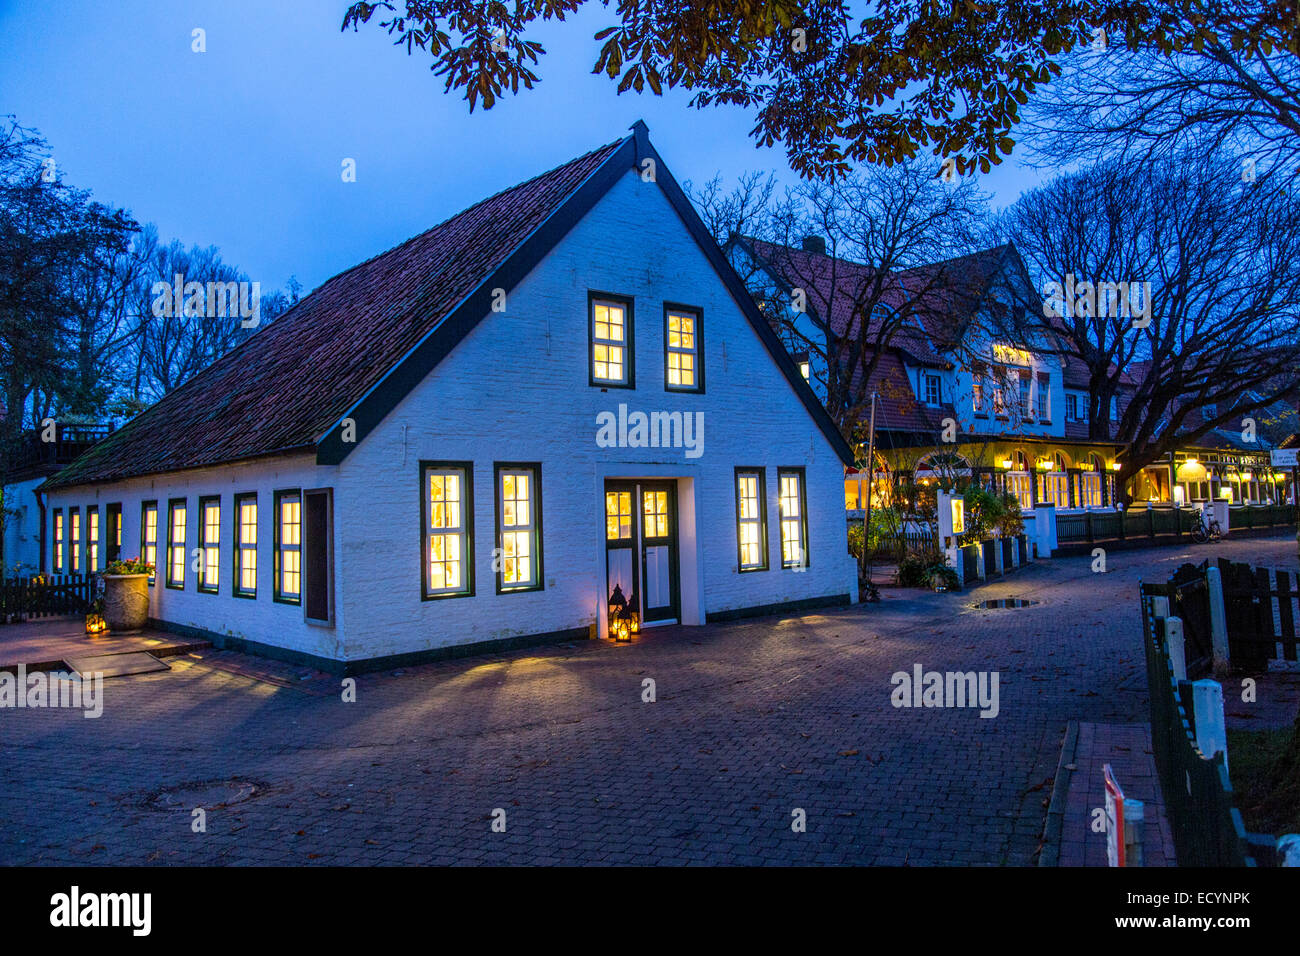 Village center, in winter, North Sea island Spiekeroog, Lower Saxony, Germany, Europe Stock Photo